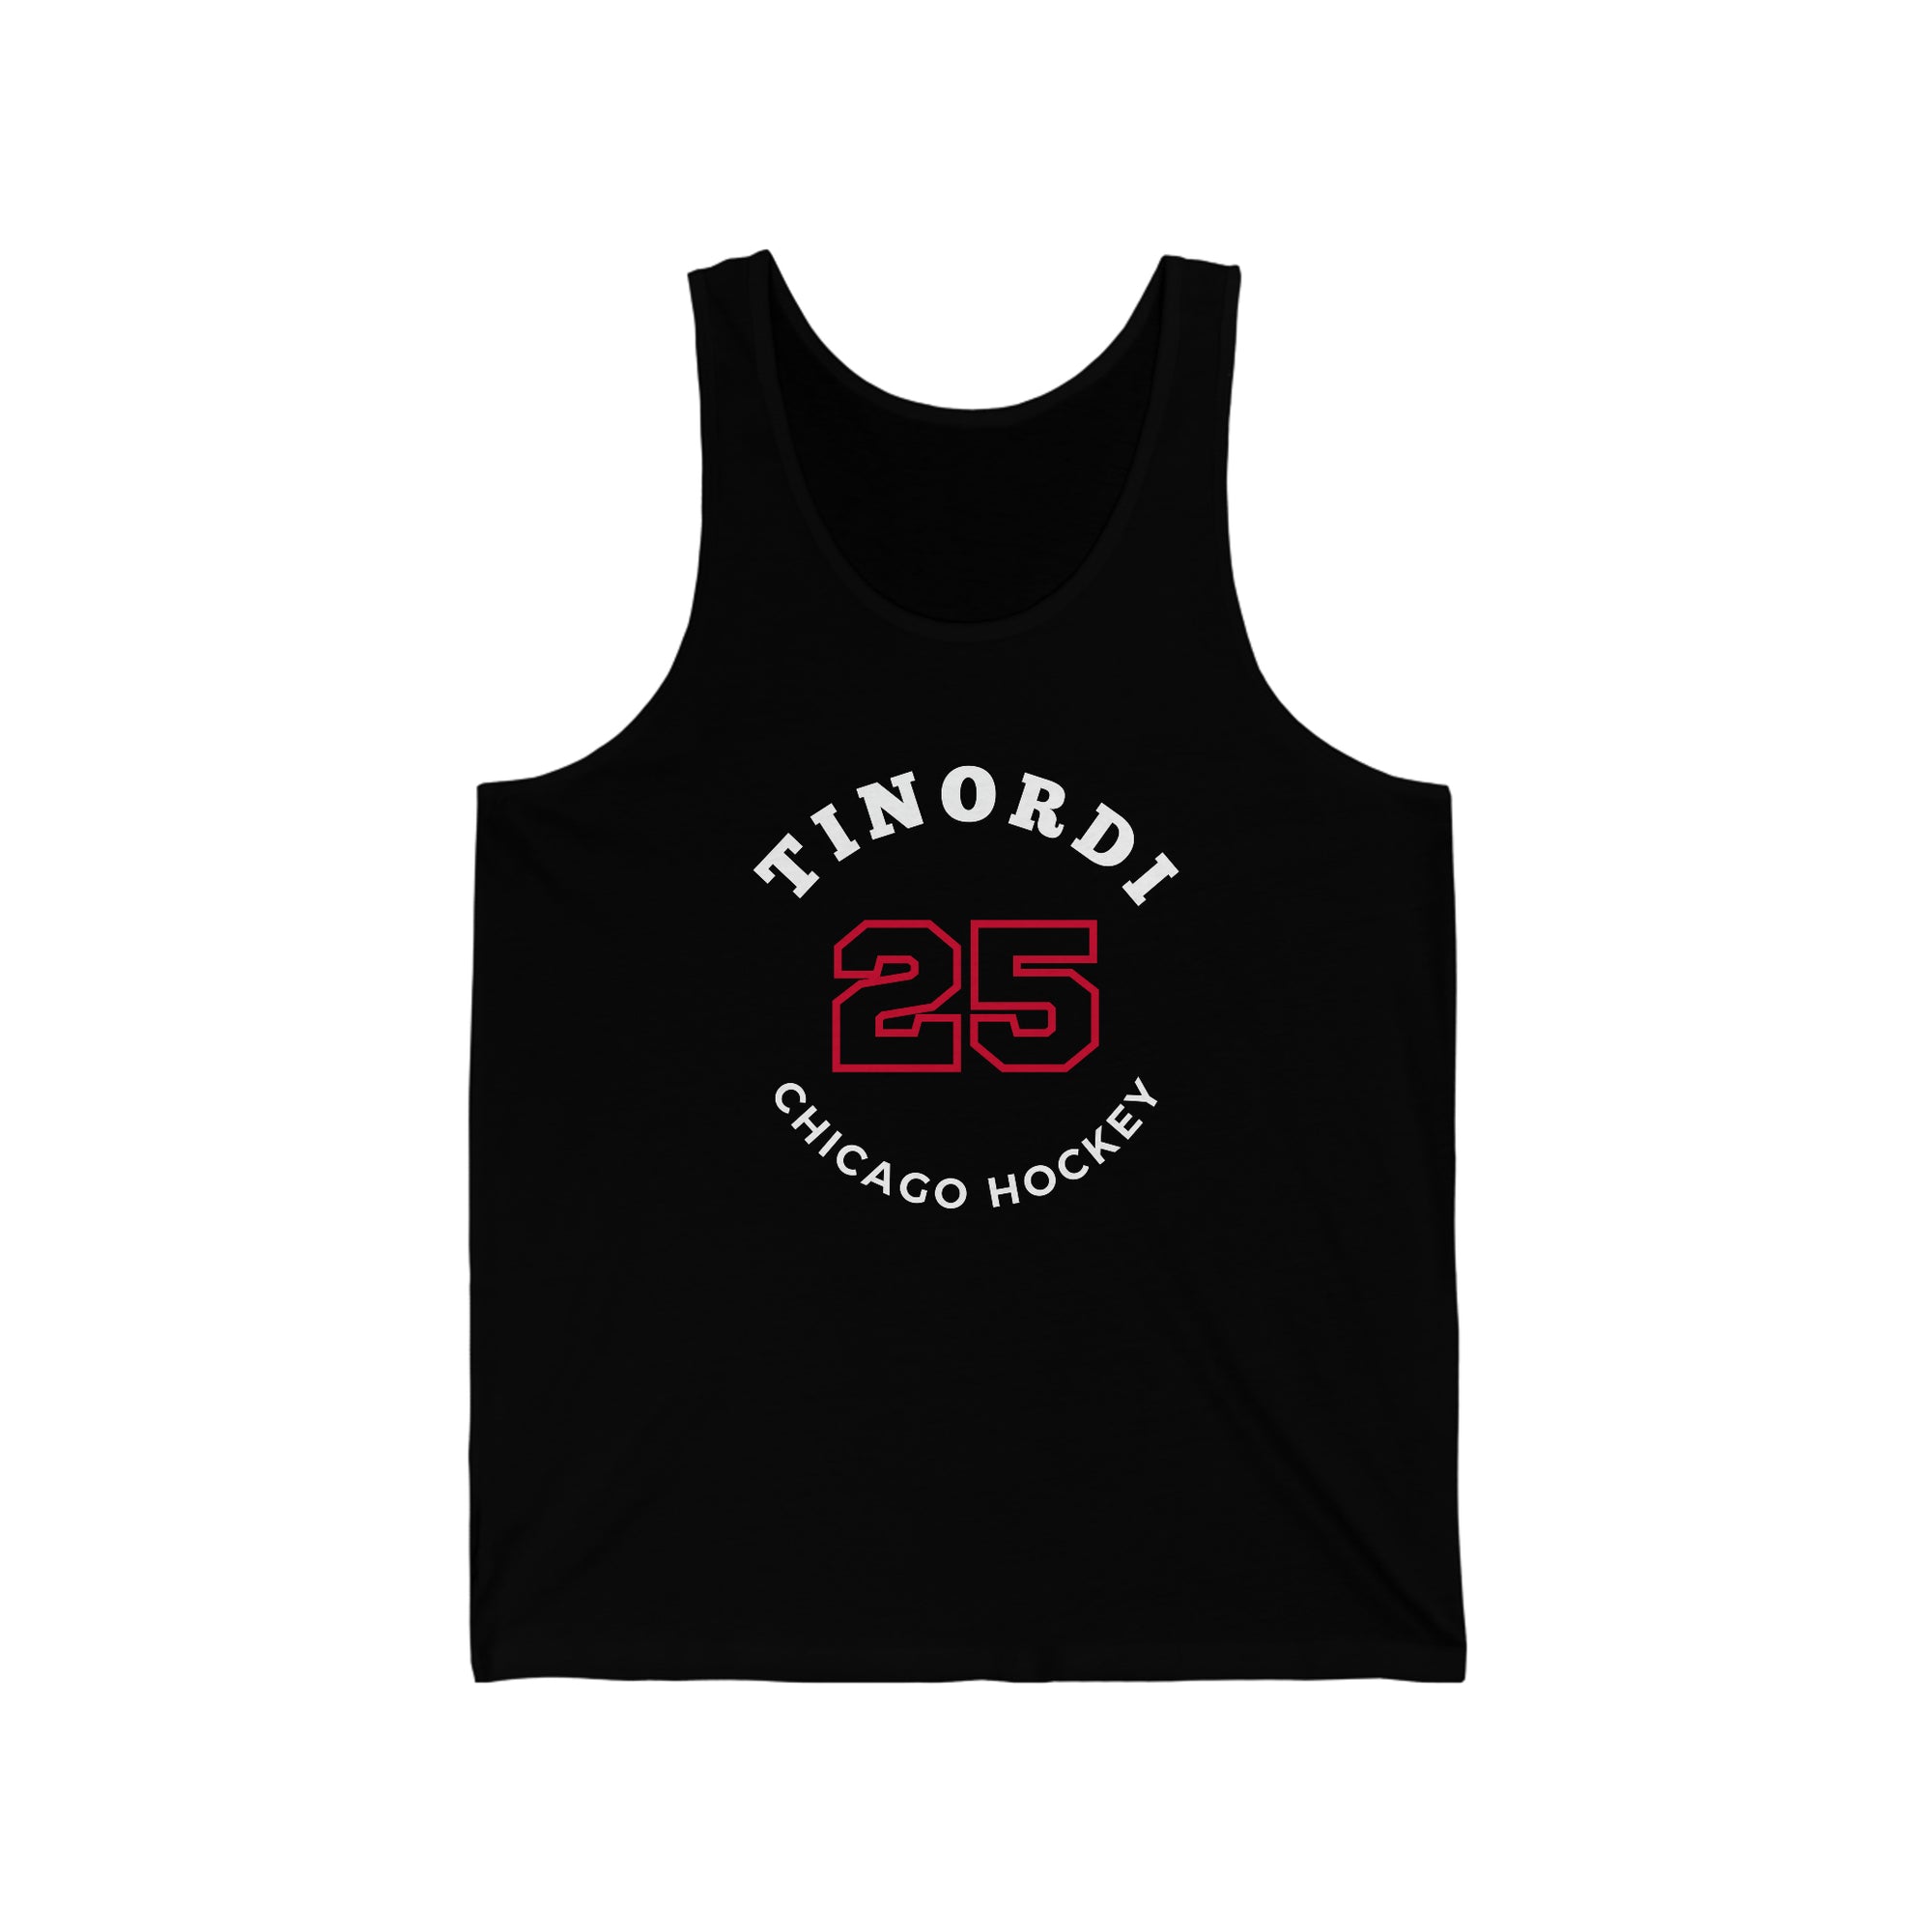 Tinordi 25 Chicago Hockey Number Arch Design Unisex Jersey Tank Top